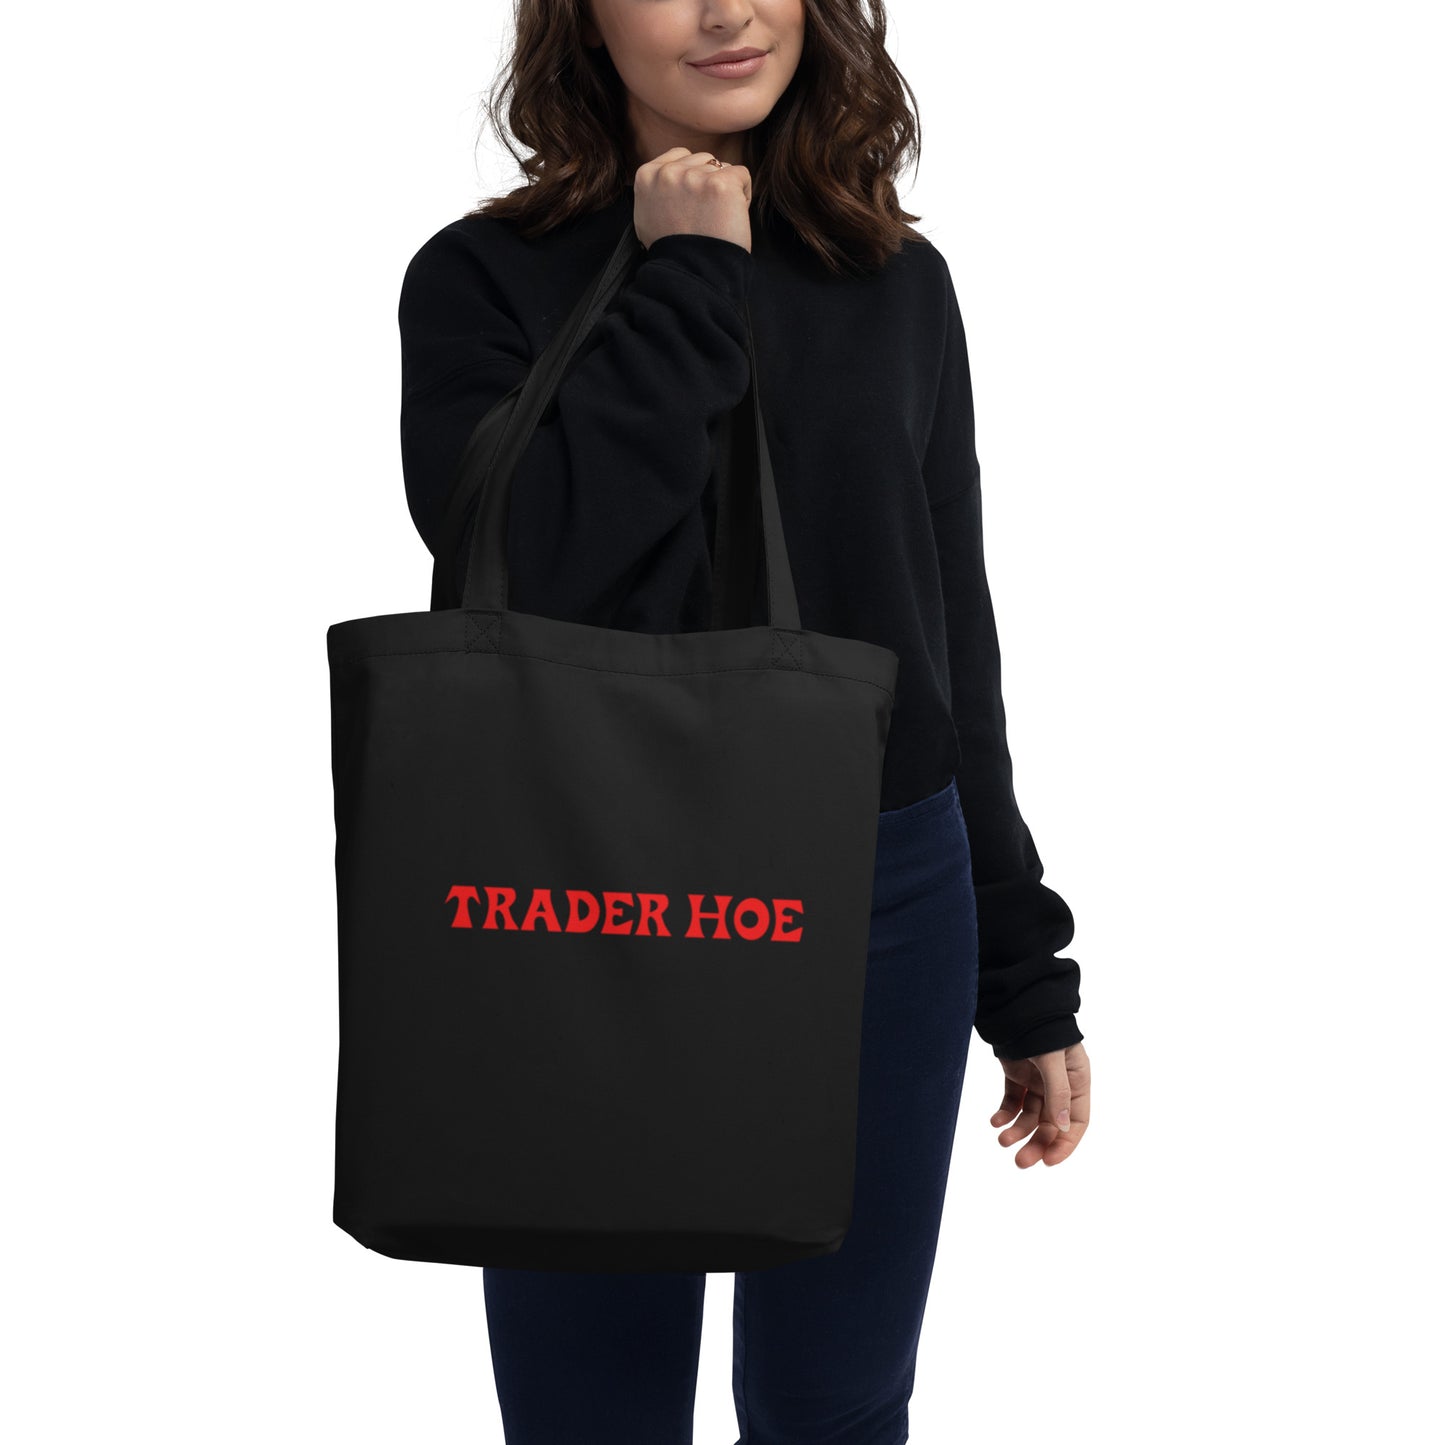 Trader Hoe Tote